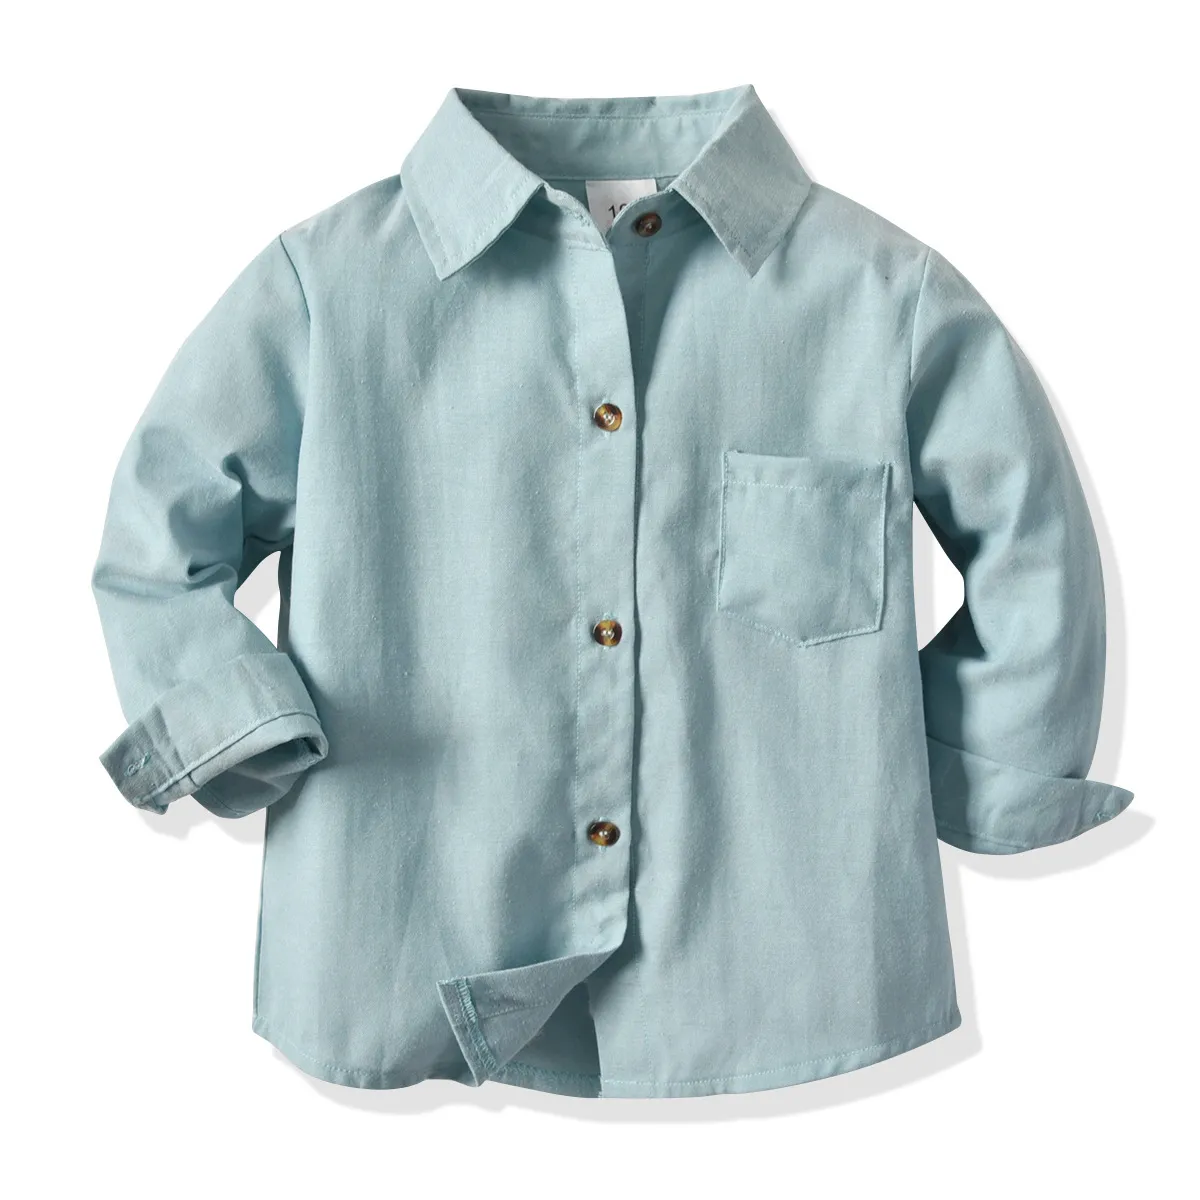 Boy Bowtie Shirt Strap Pants Suit Children's Baby Cotton Gentleman Dress 210515